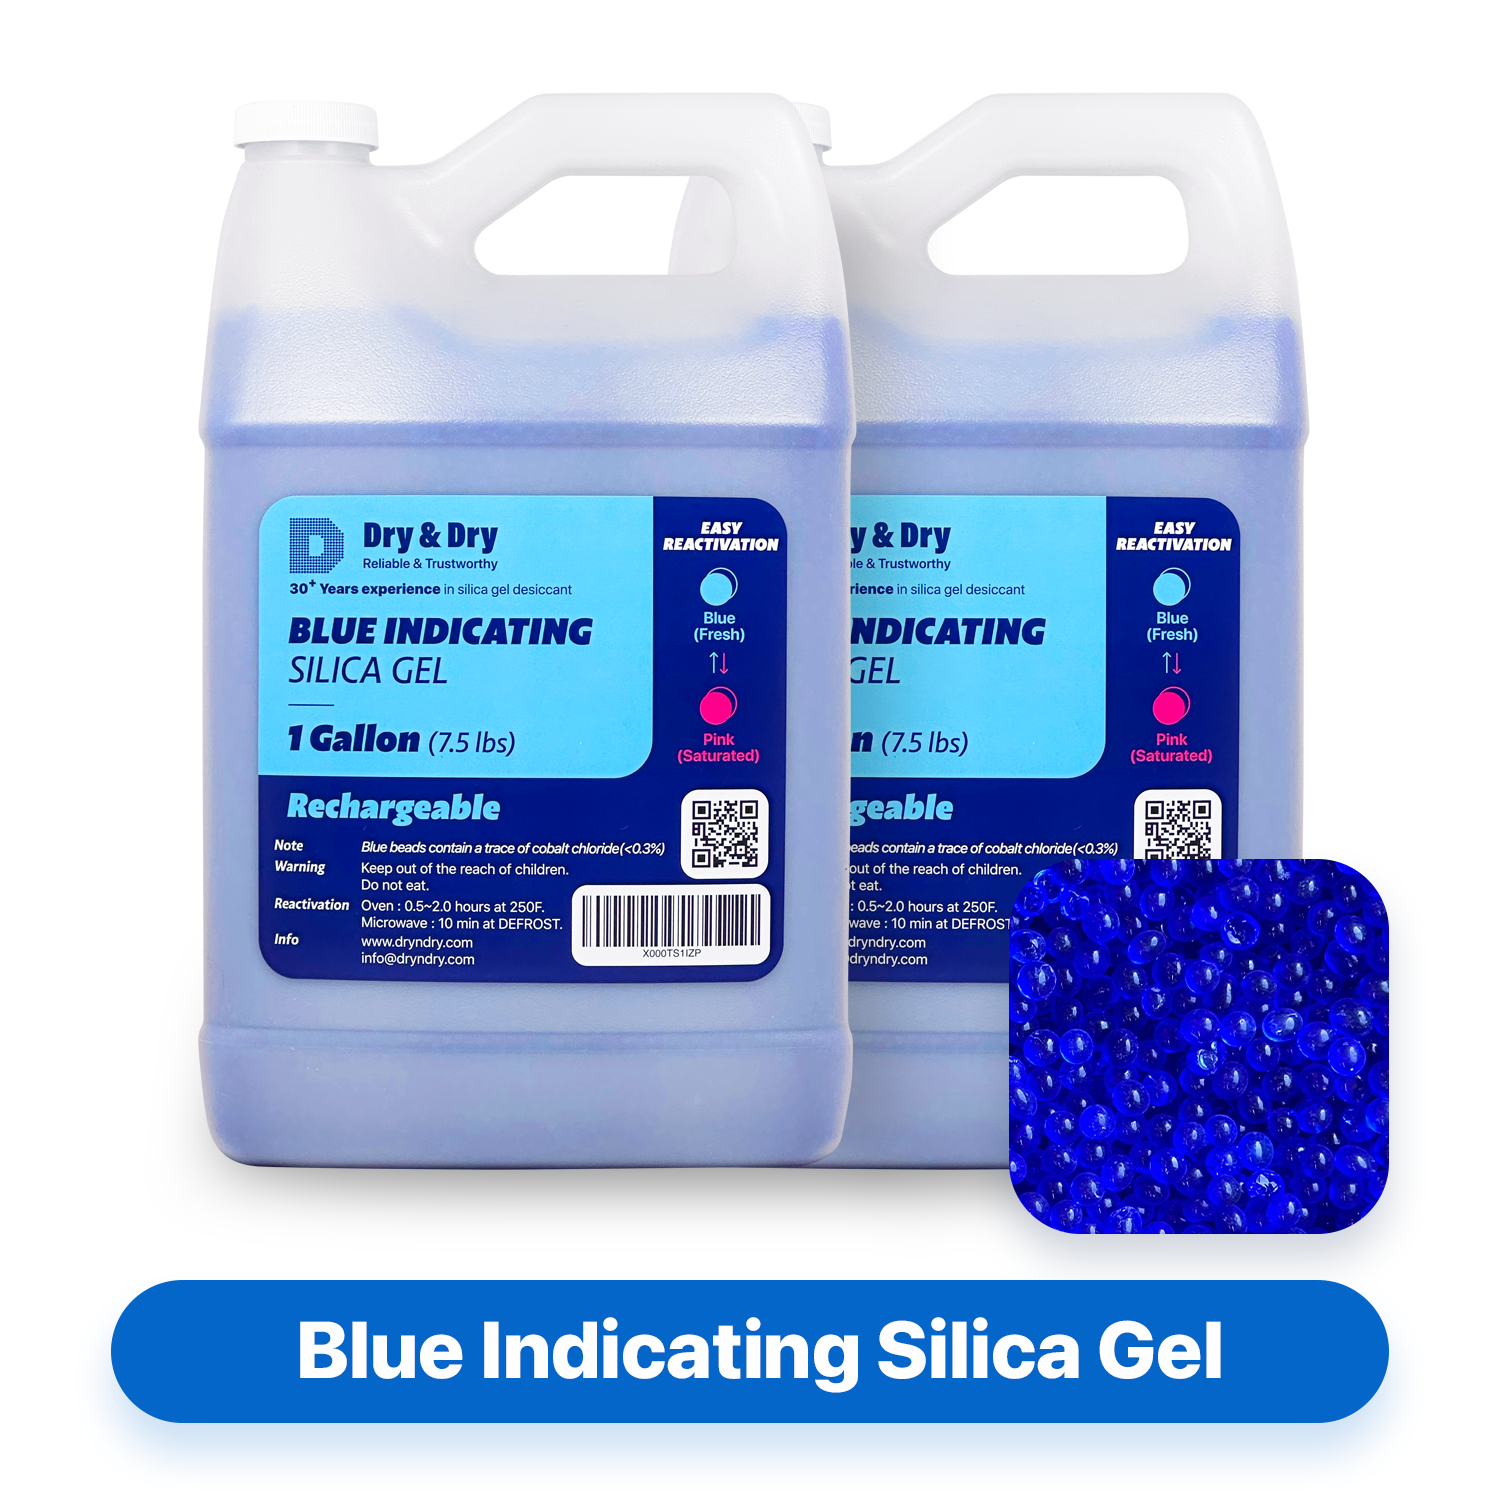 1/2 Gallon Dry & Dry Premium Blue Indicating Silica Gel Beads